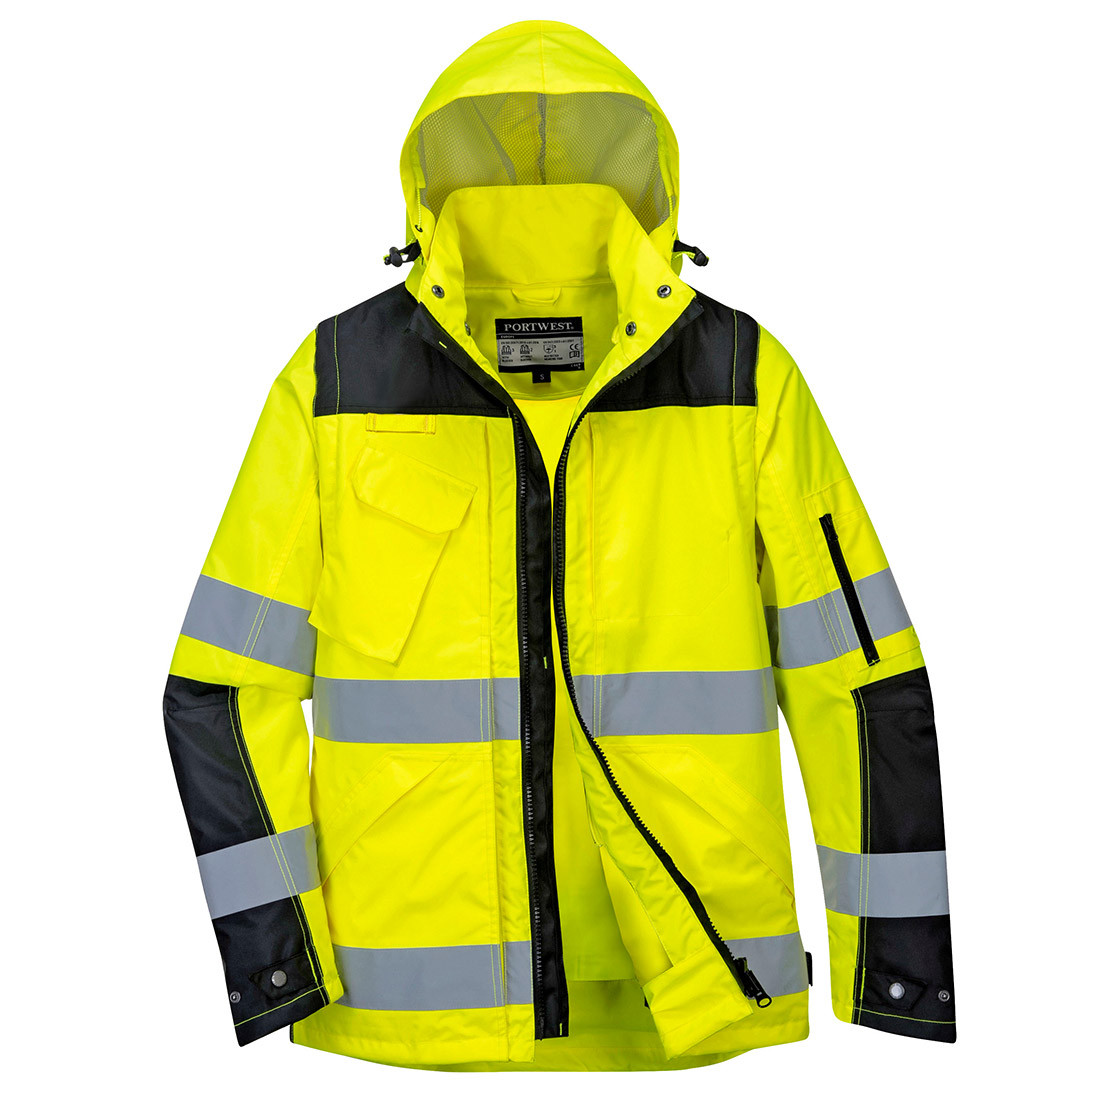 Pro Hi-Vis 3in1 Jacket - Safetywear